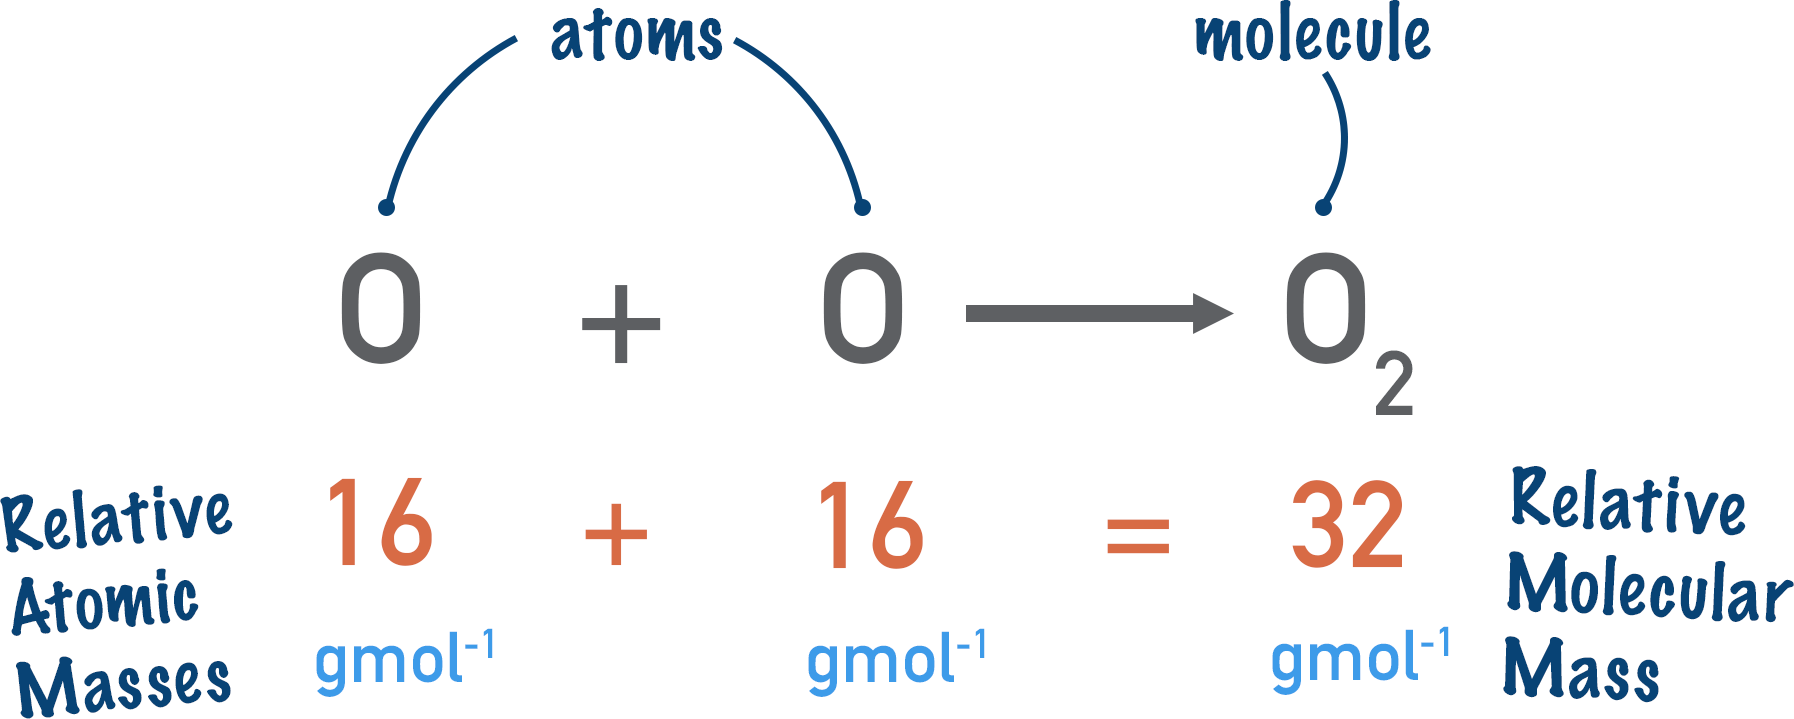 how to find relative molecular mass using atomic mass